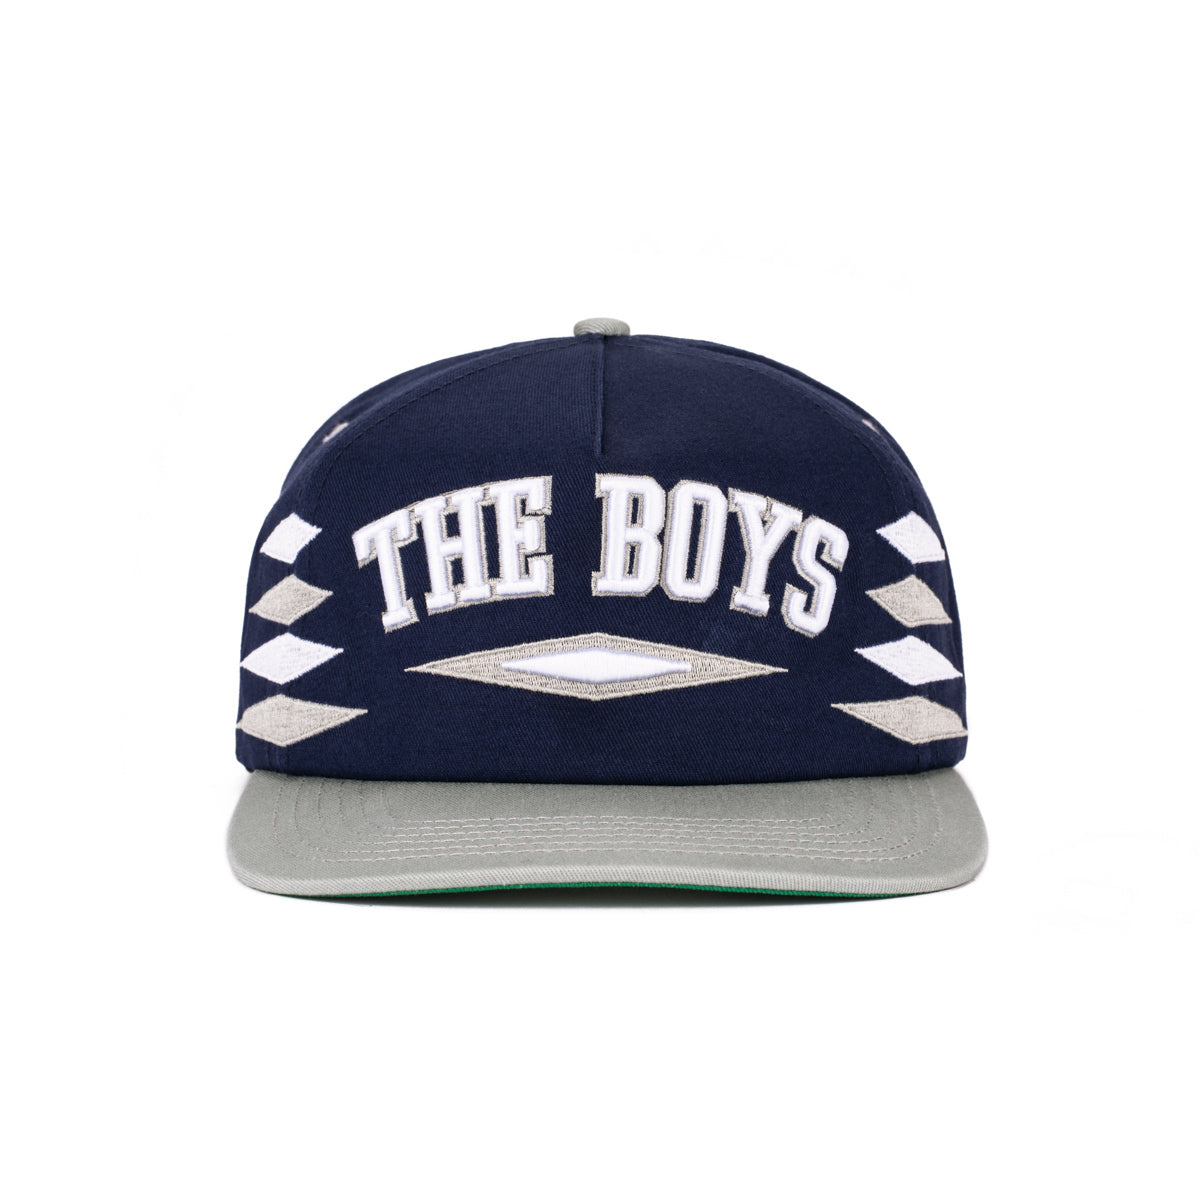 The Boys Diamond Retro Hat-Hats-Bussin With The Boys-Navy/Grey-Barstool Sports